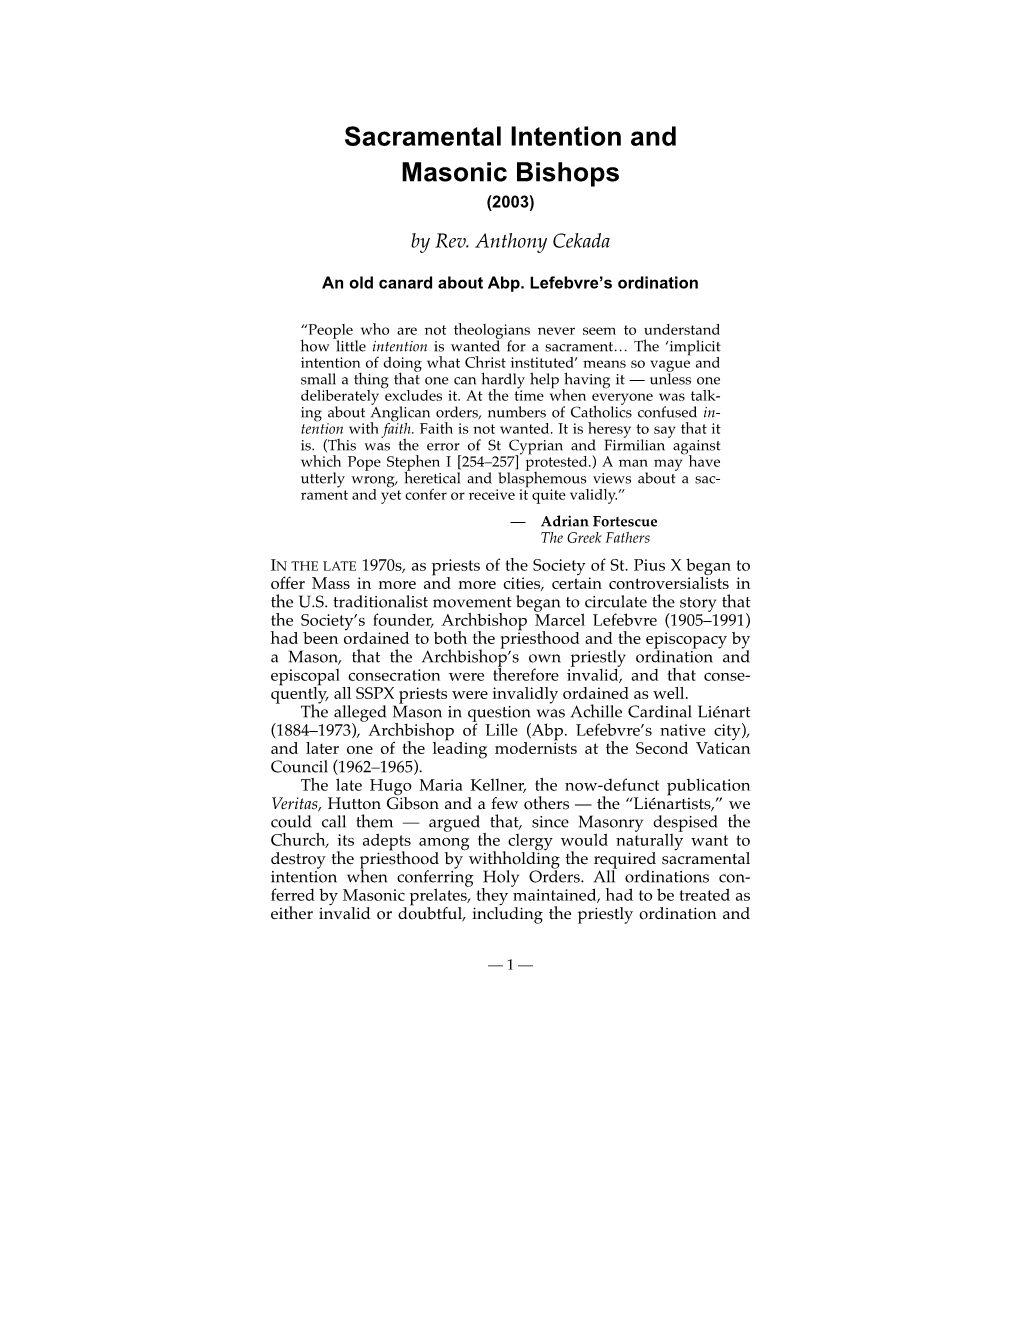 Sacramental Intention and Masonic Bishops (2003)